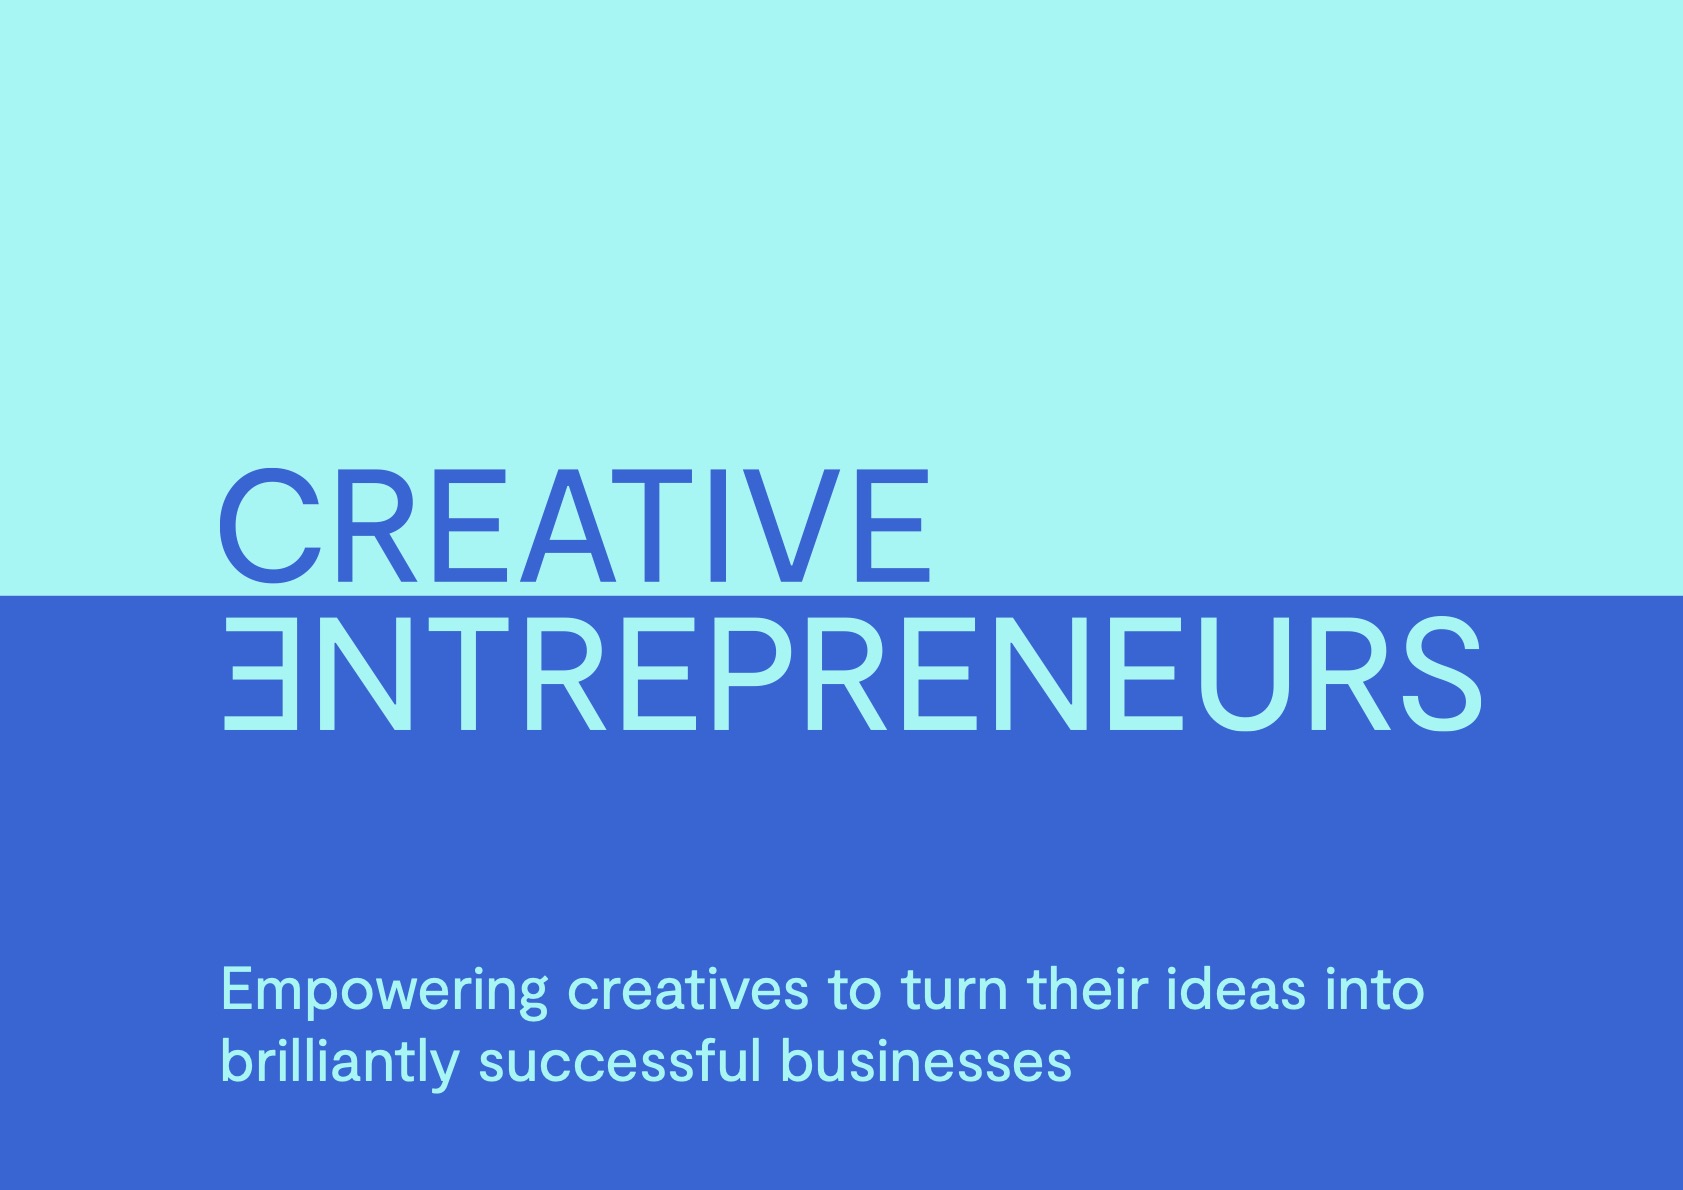 Accelerate your creative business via powerful strategic partnerships